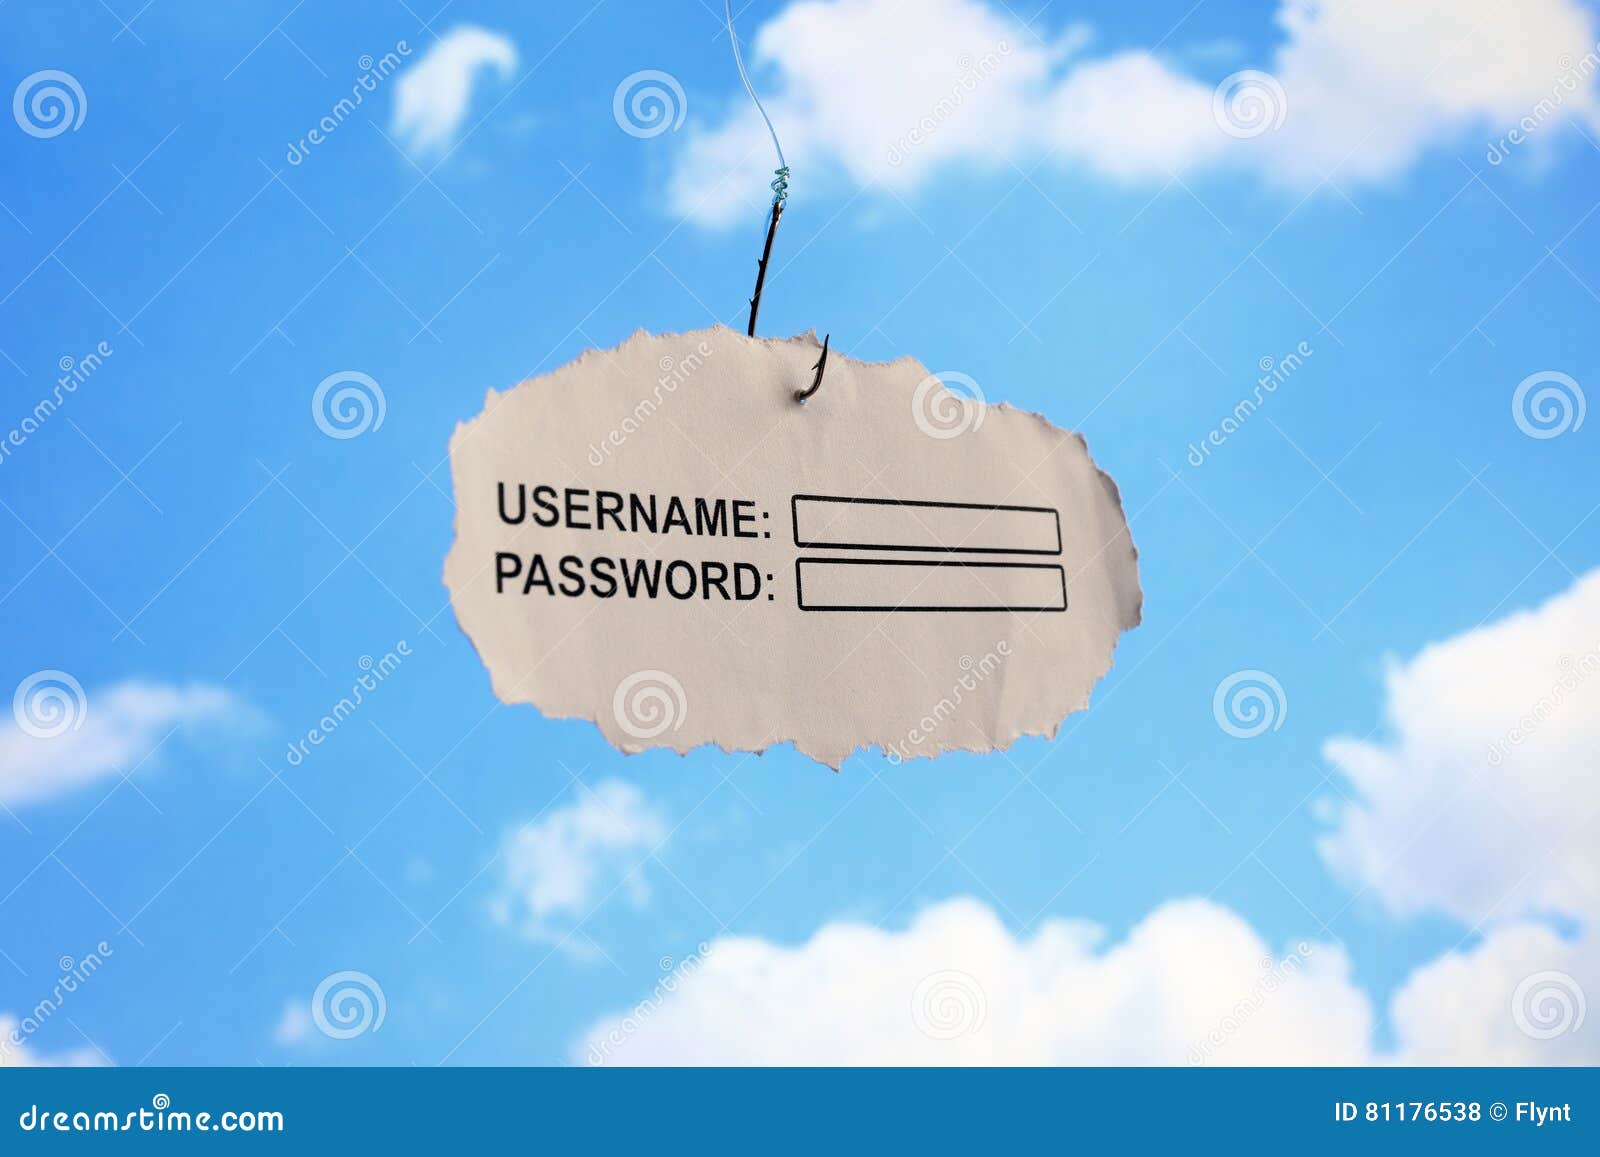 Anti essays login and password